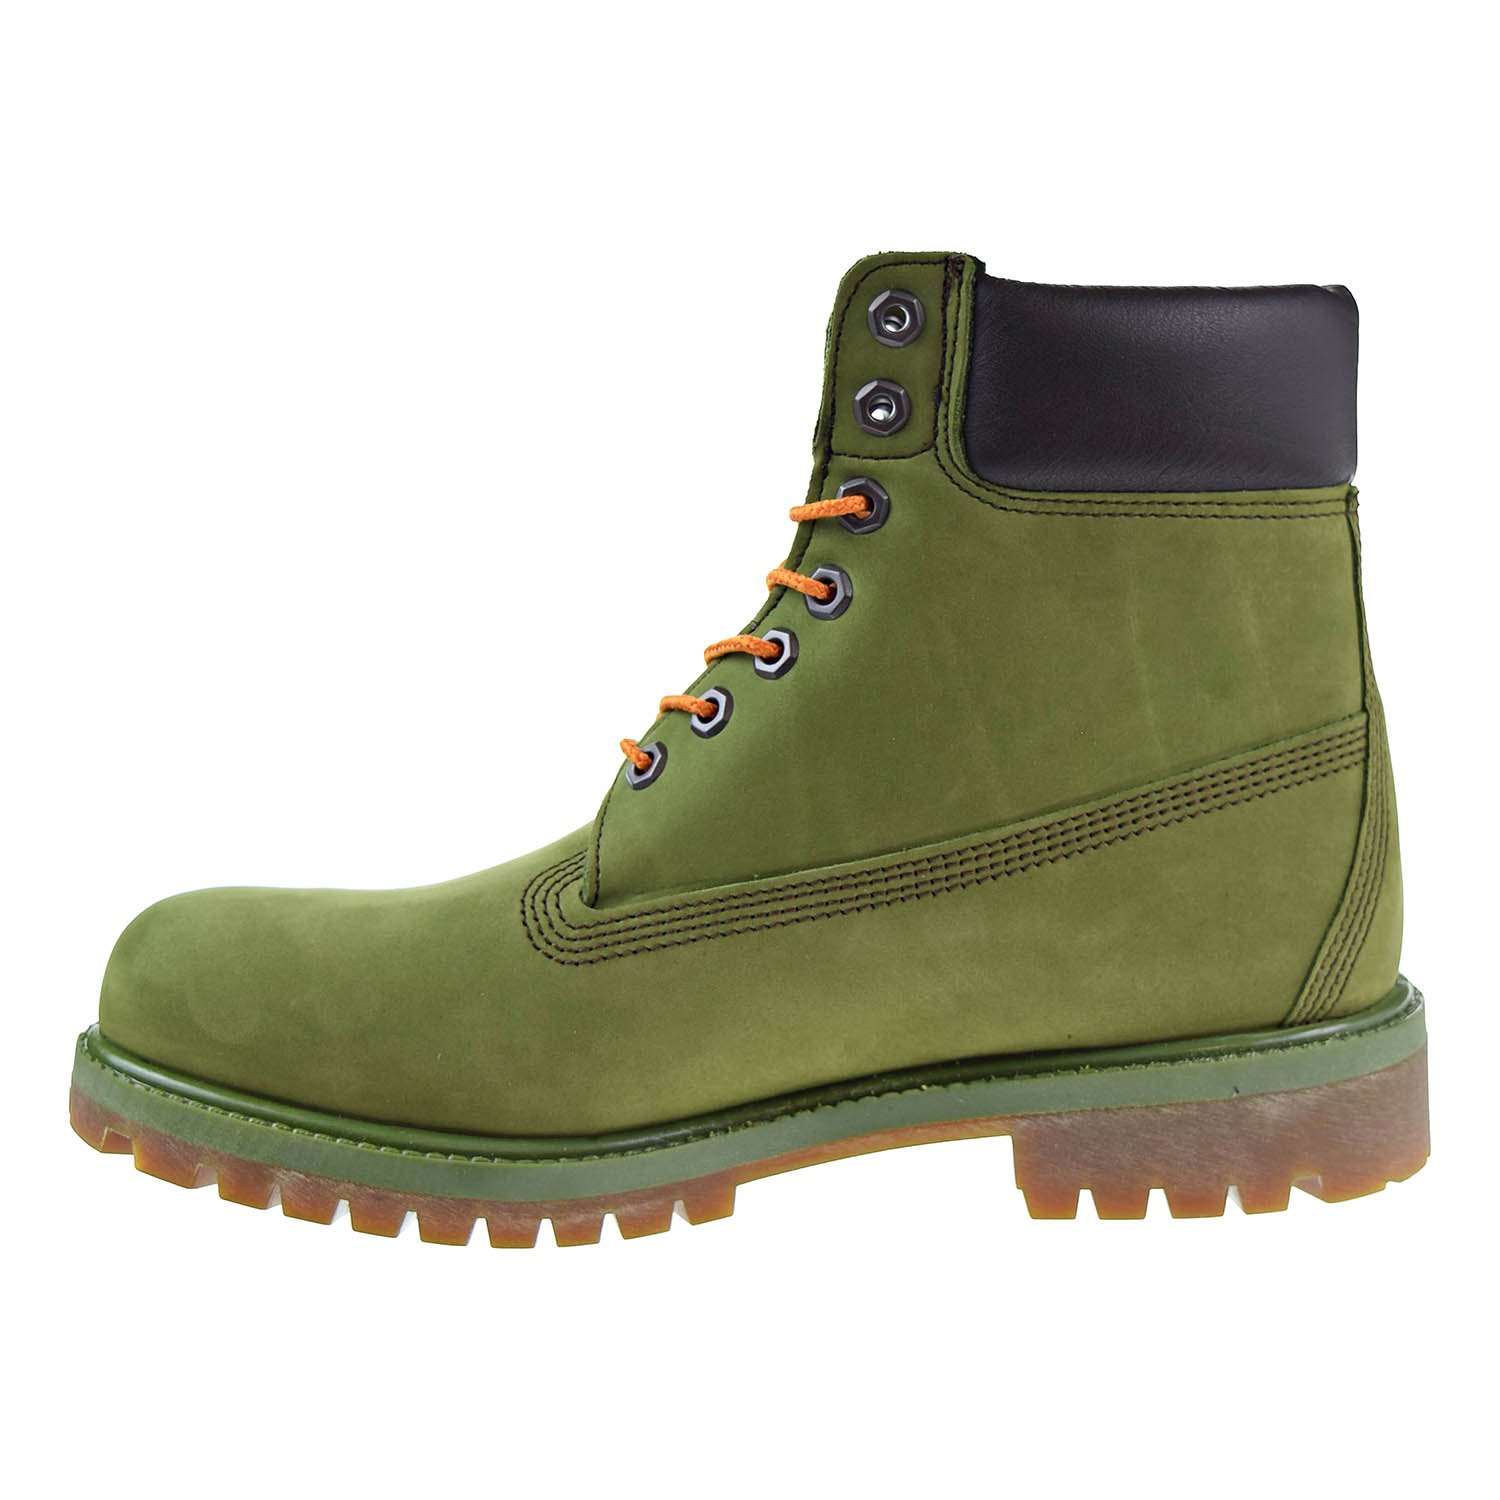 Timberland 6 Inch Premium Mens Boots Green tb0a1m72 eBay